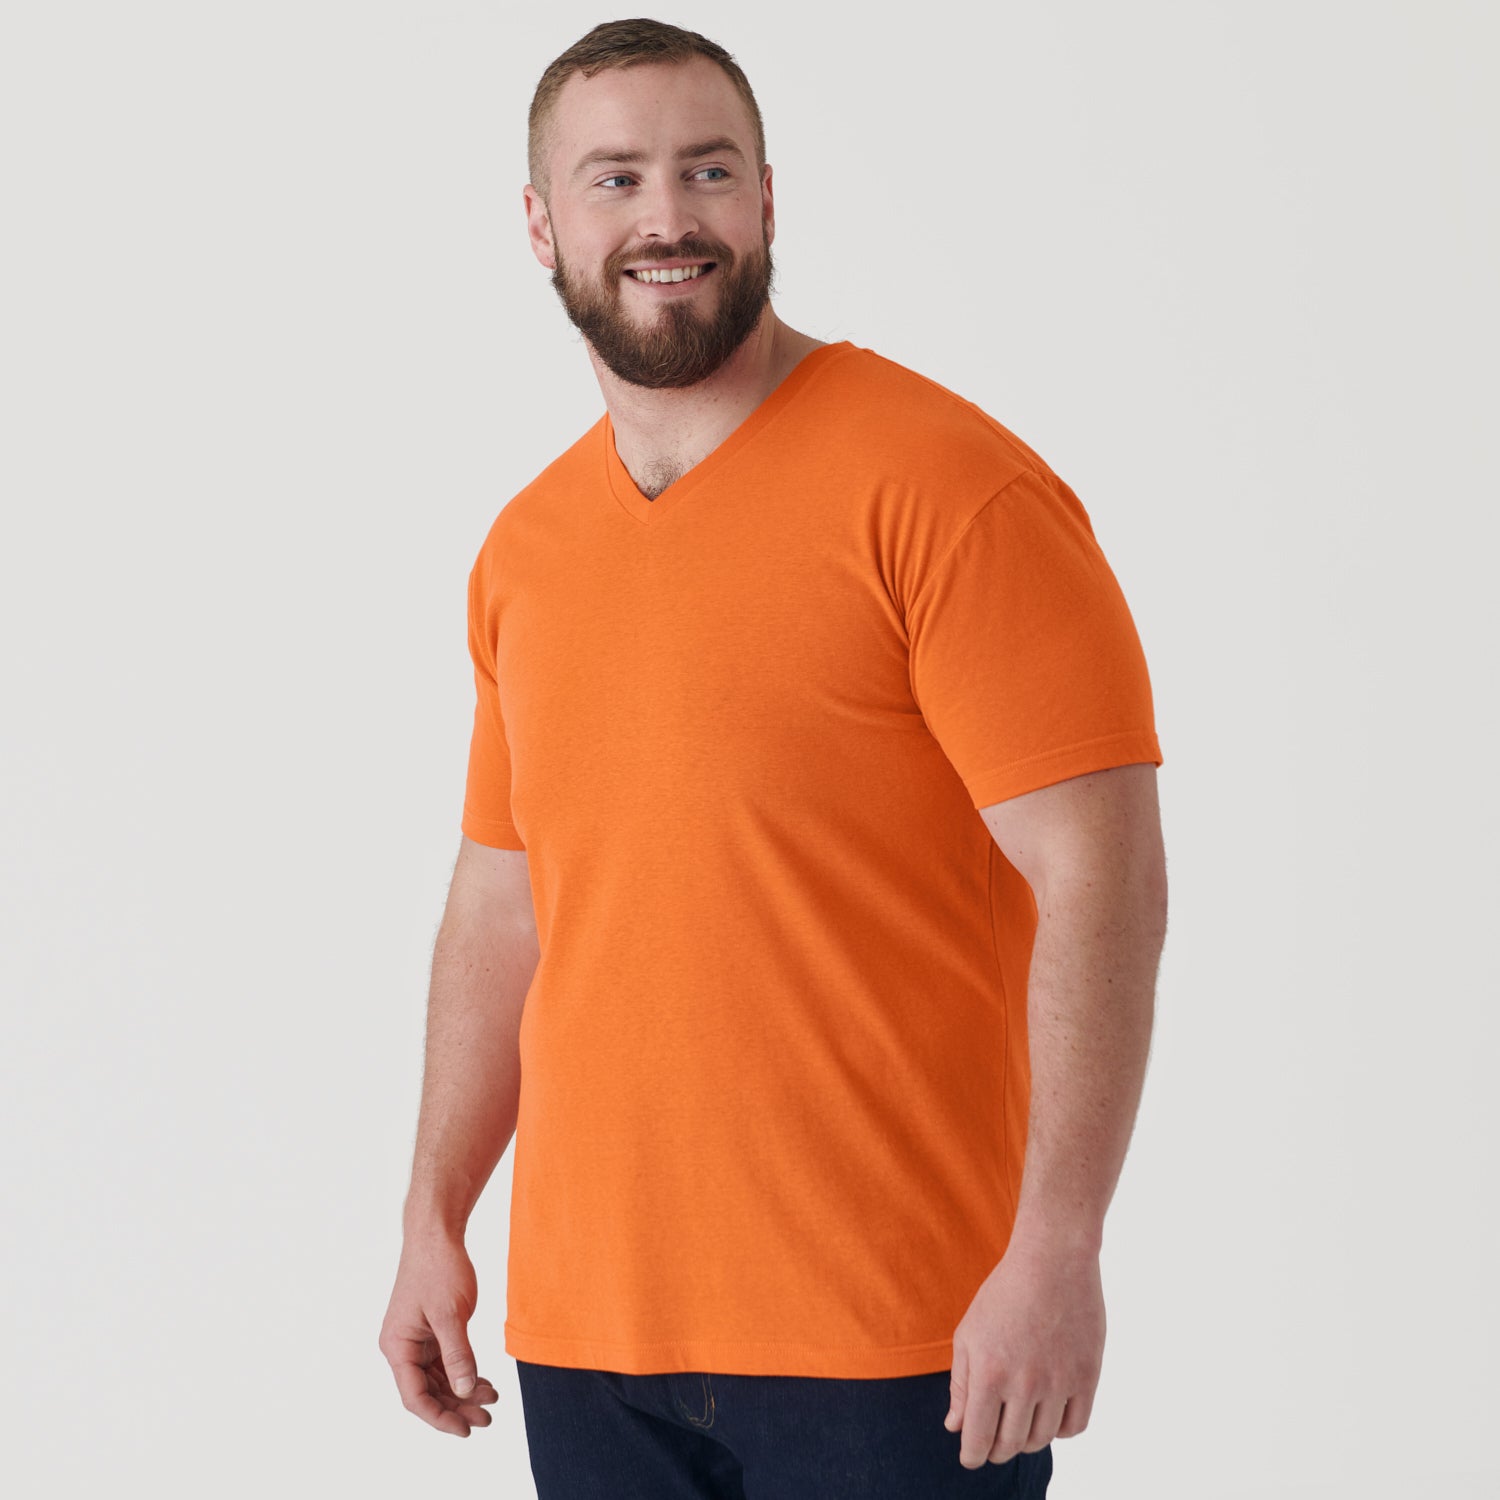 Vneck Men's Shirt - Orange - S